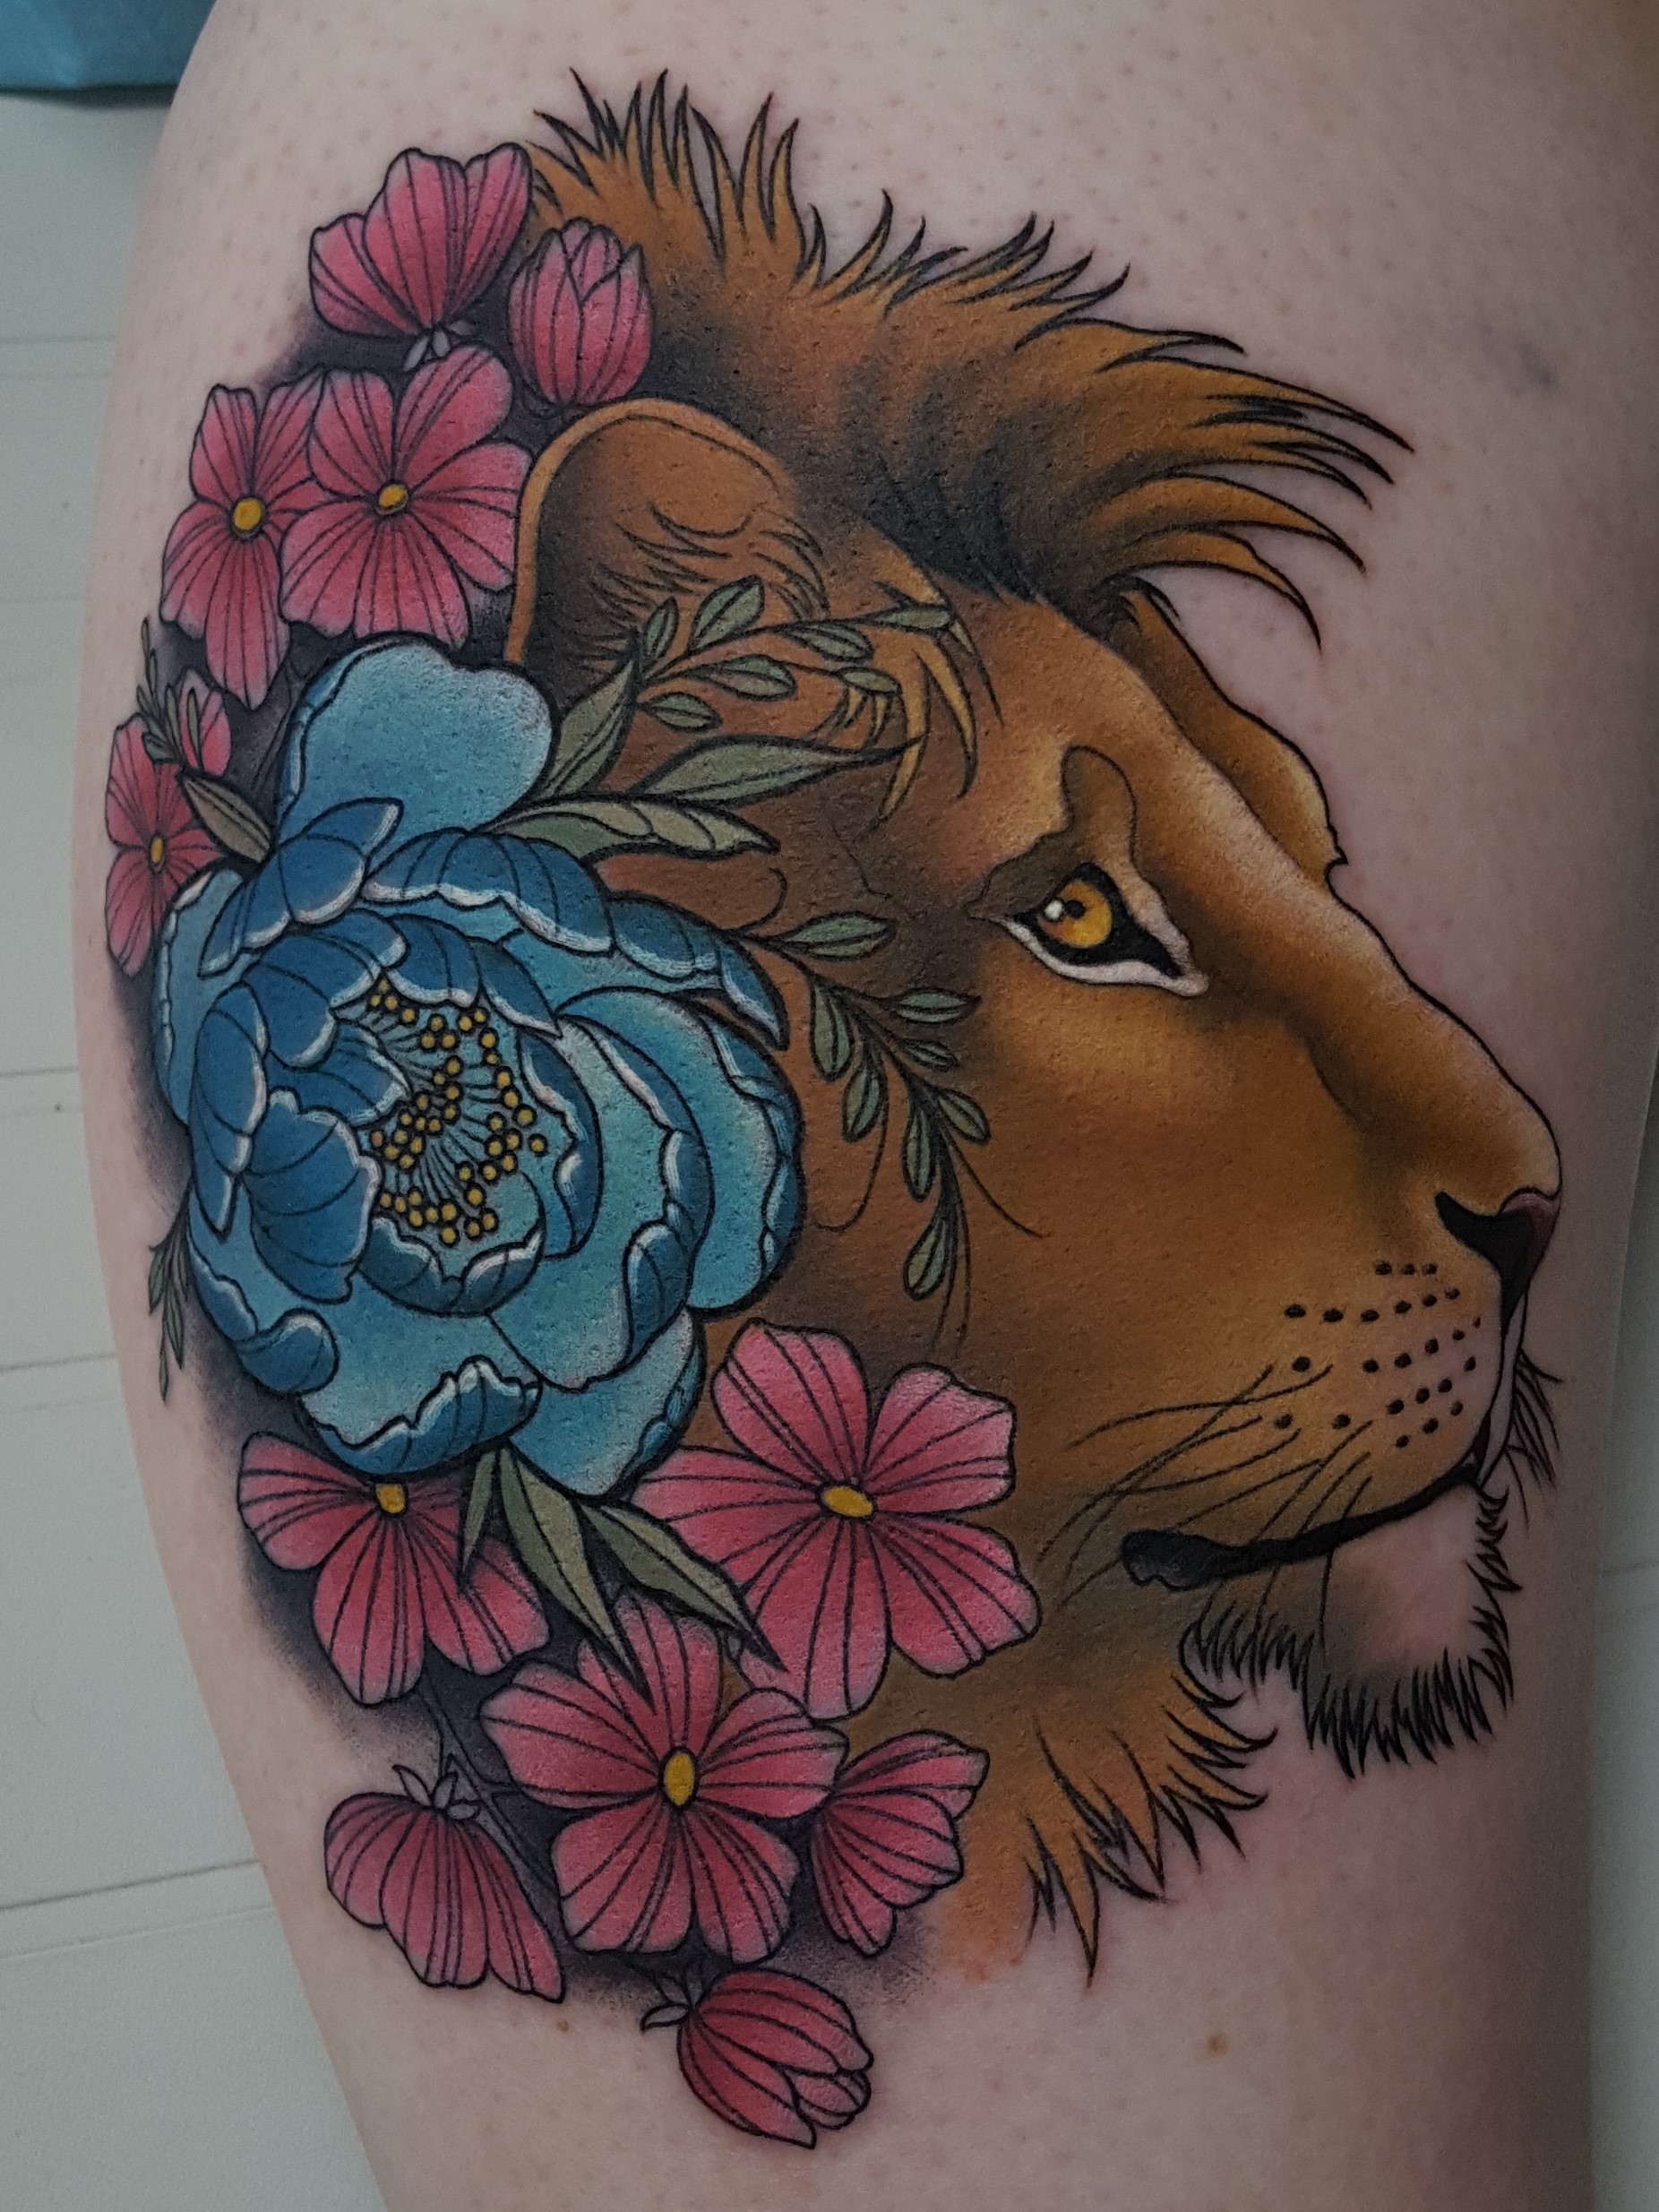 Lion head tattoo by Cracker Joe Swider in Connecticut